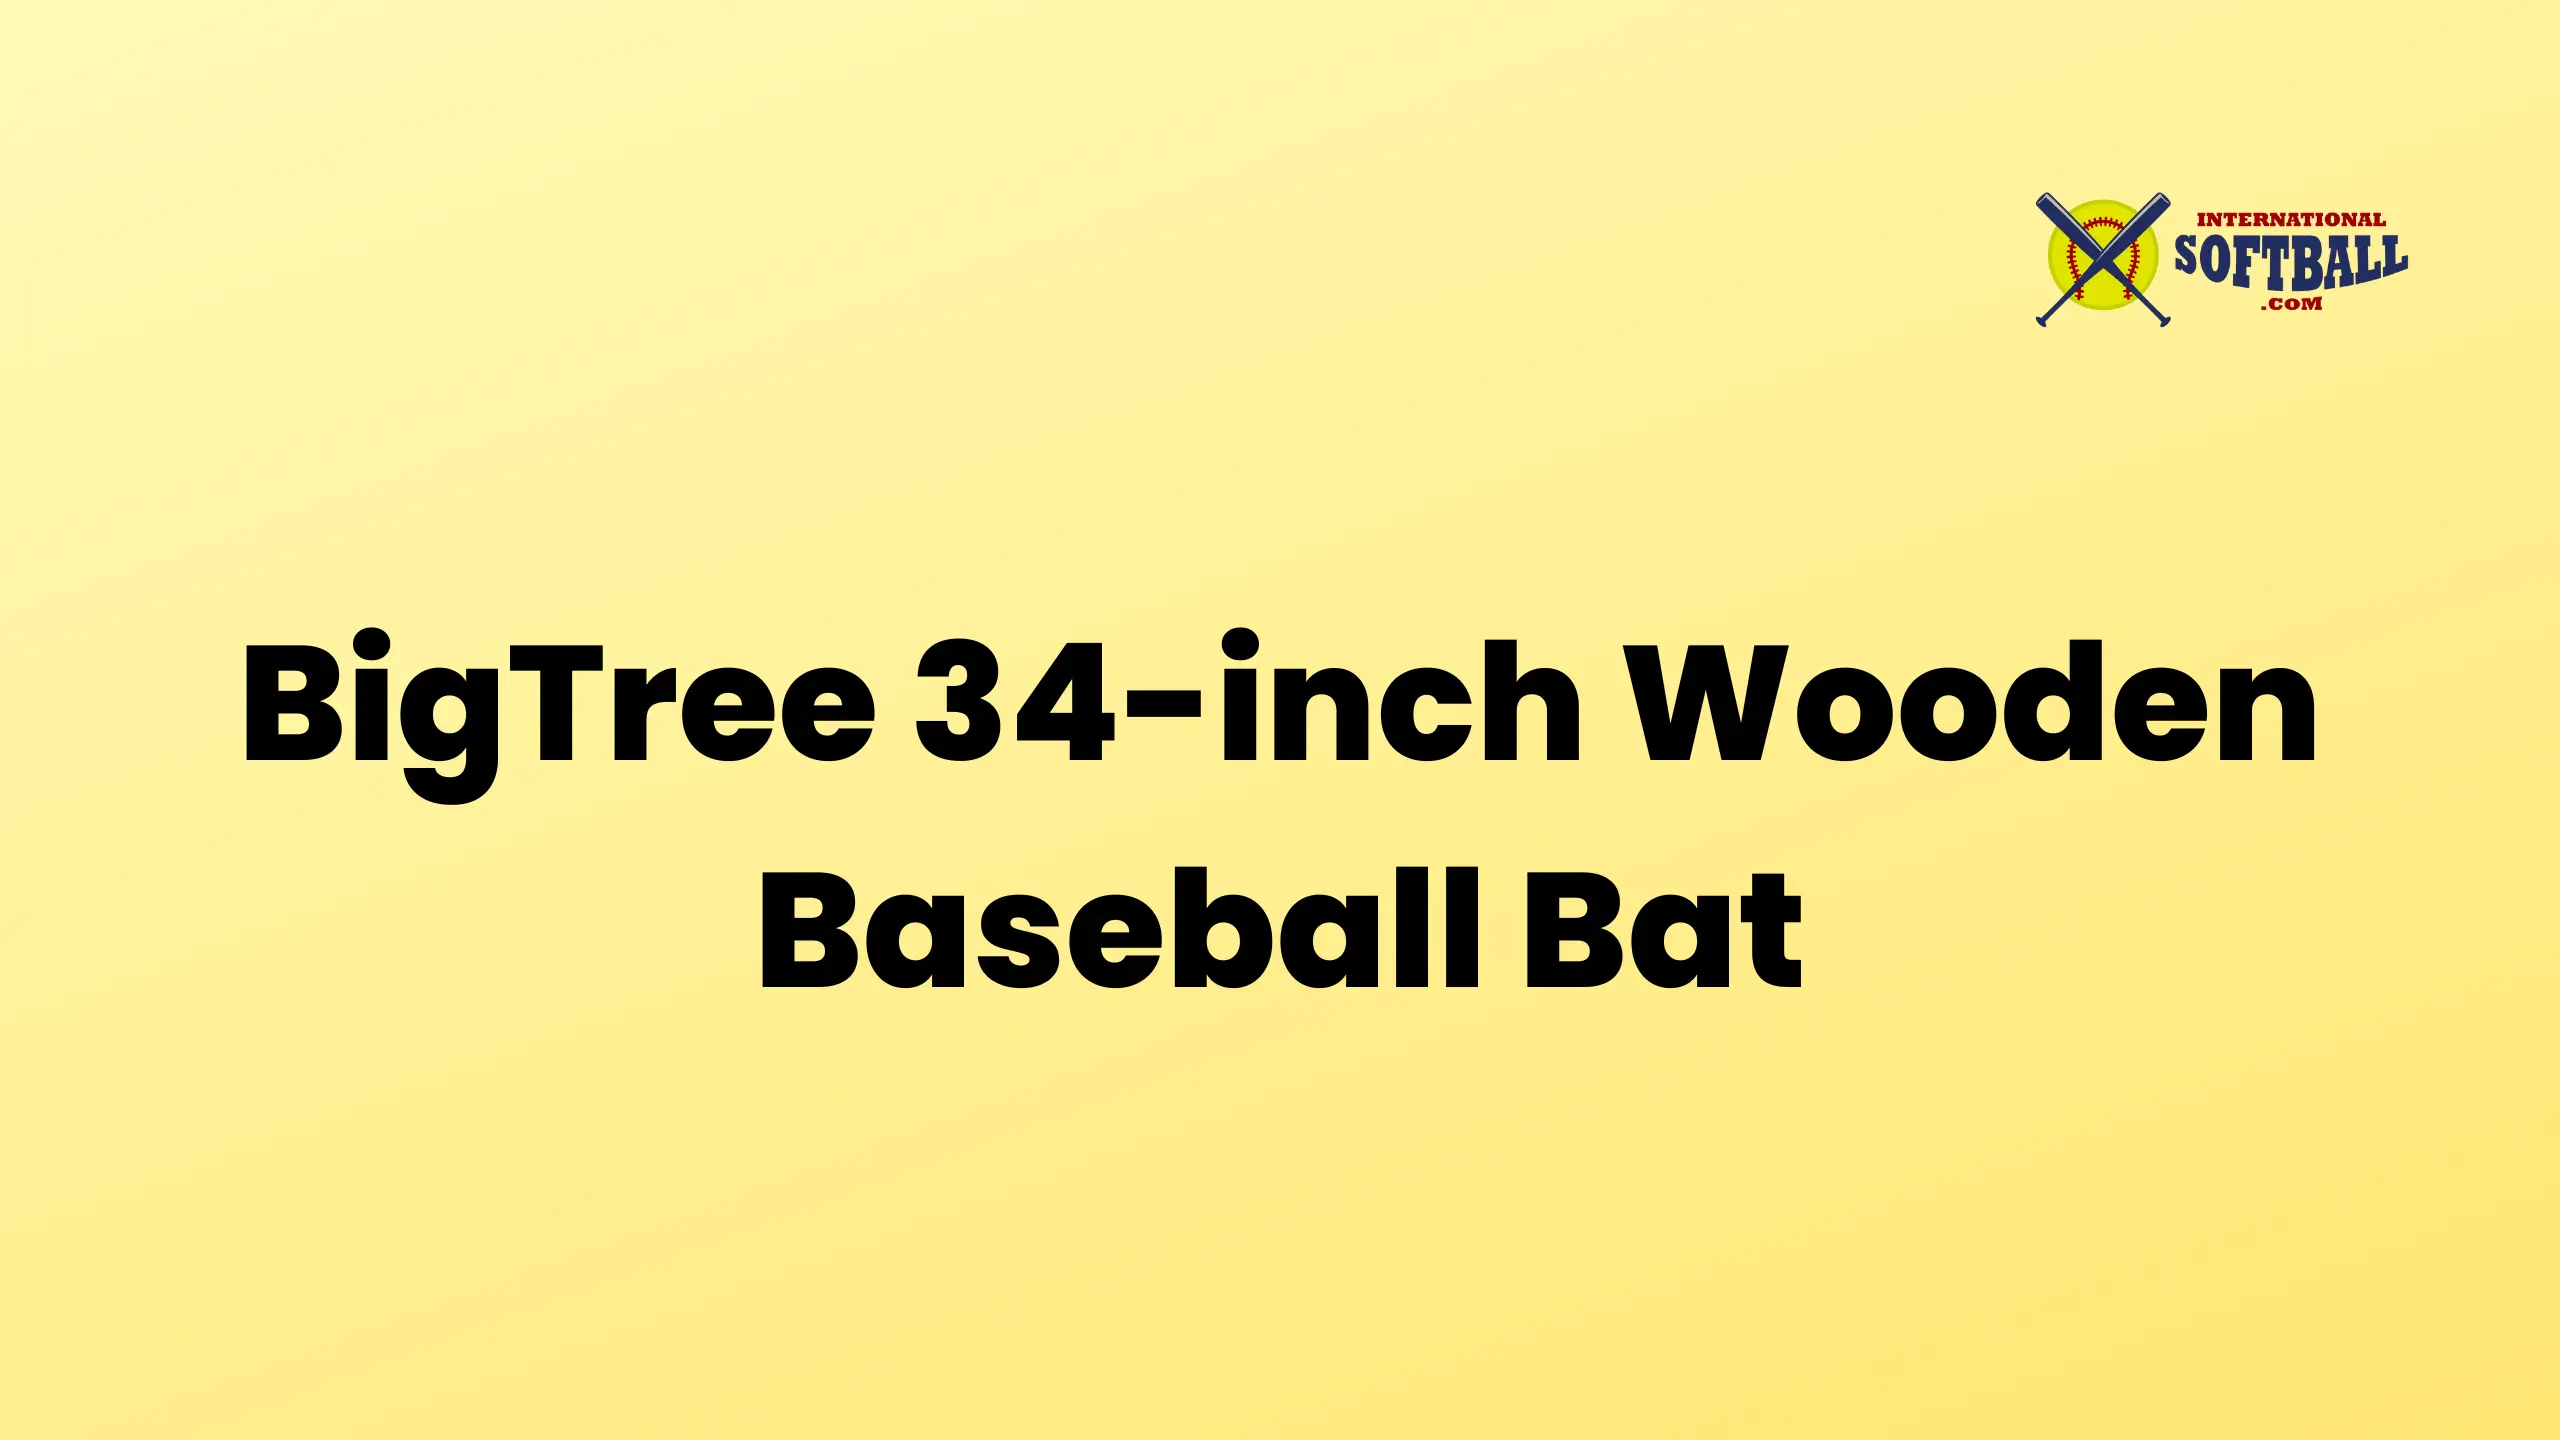 BigTree 34-inch Wooden Baseball Bat